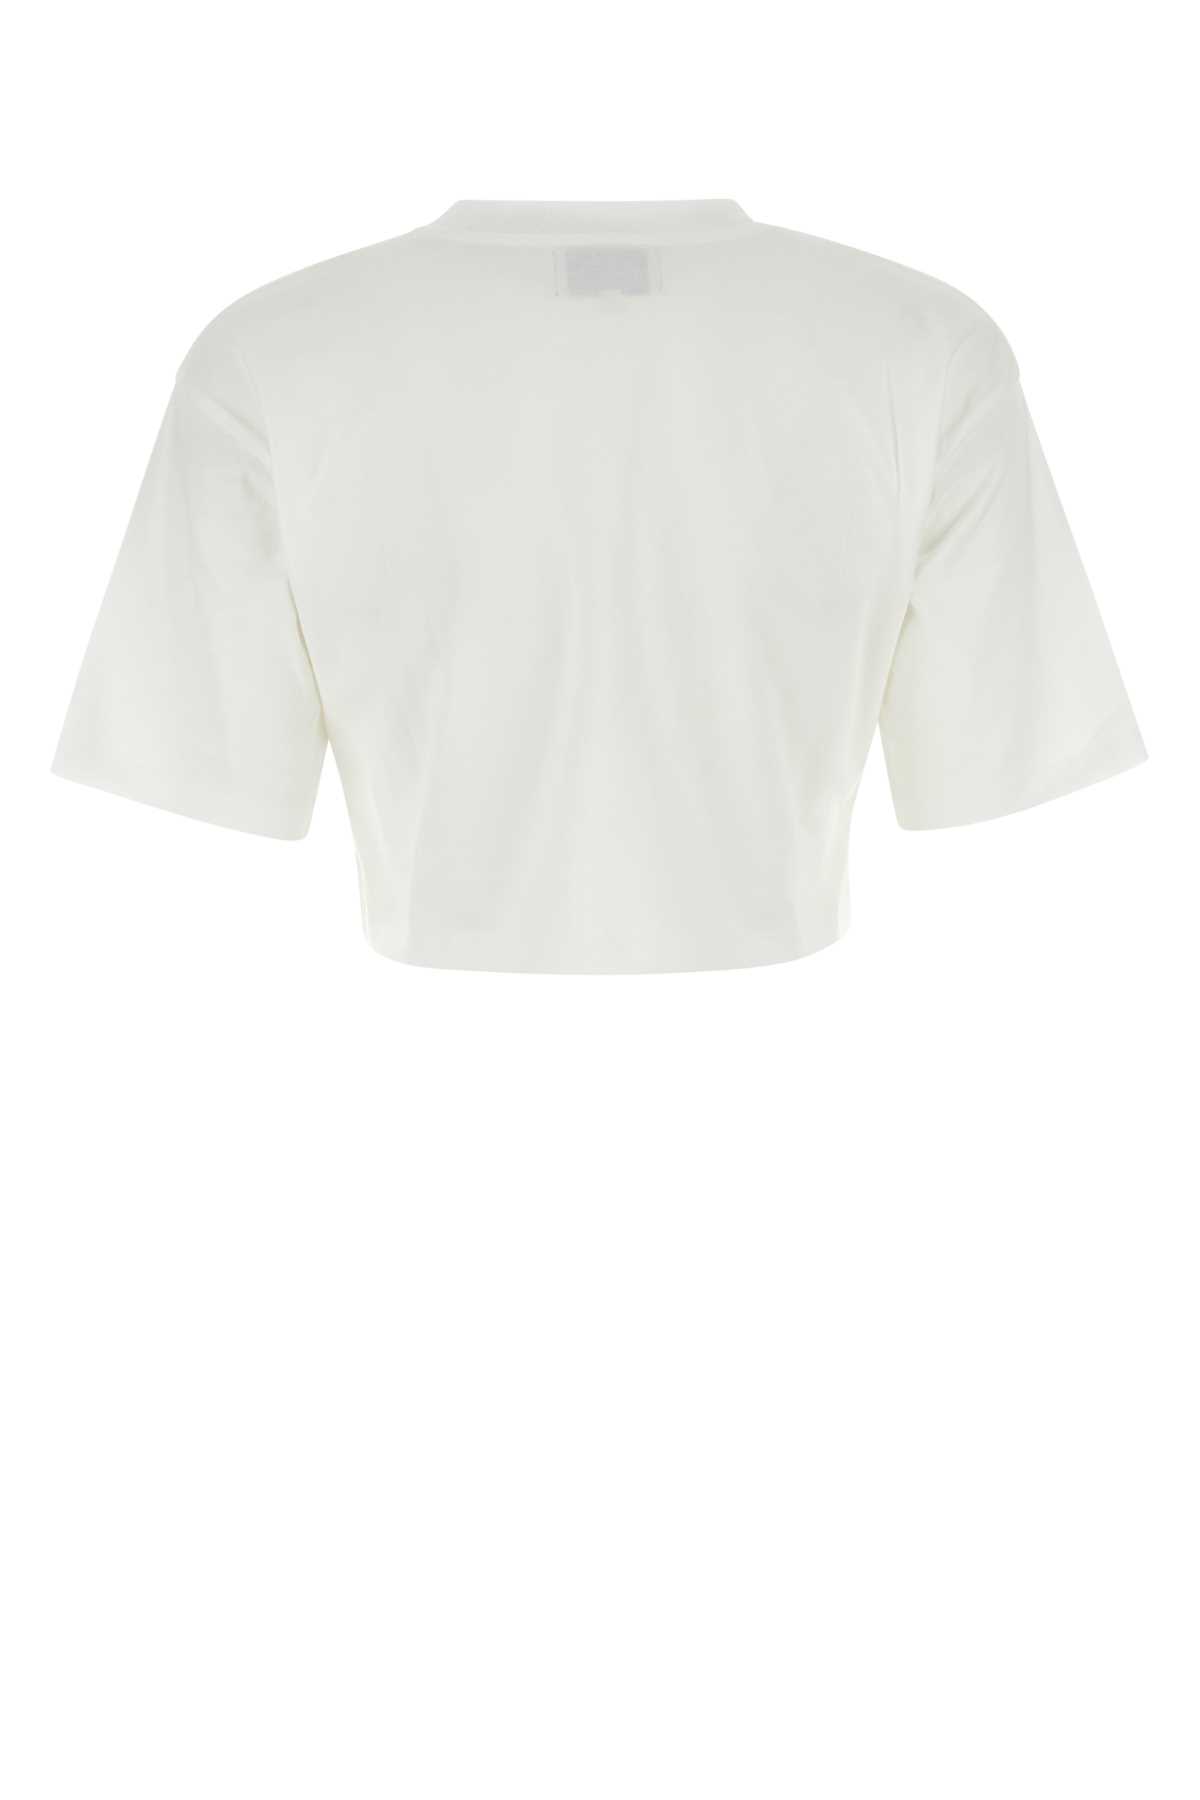 Loulou Studio White Cotton Gupo T-shirt